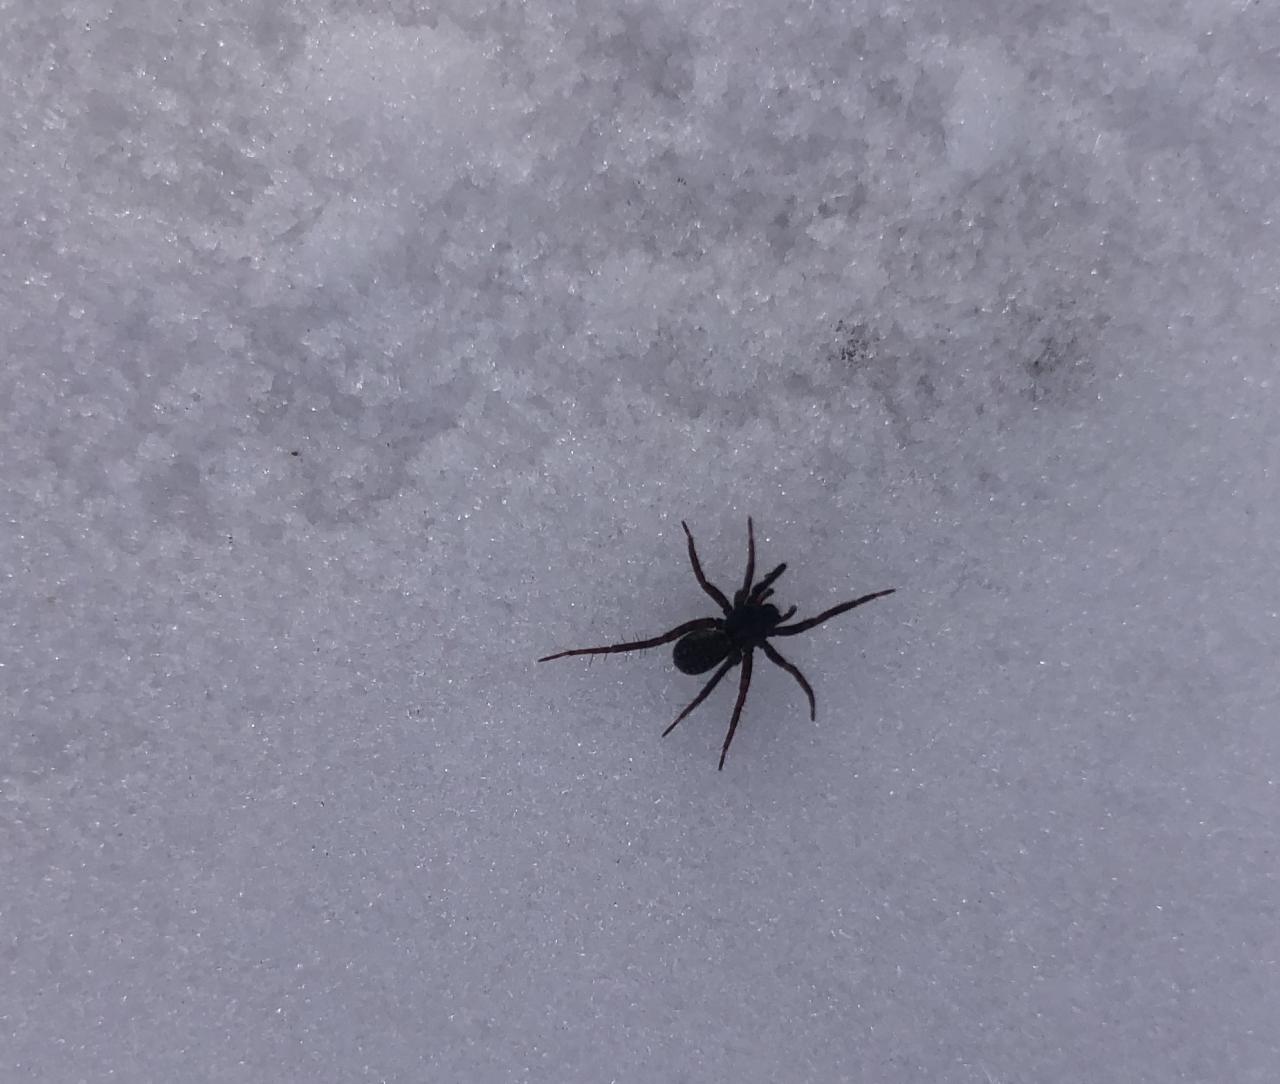 Black winter spider against white snow